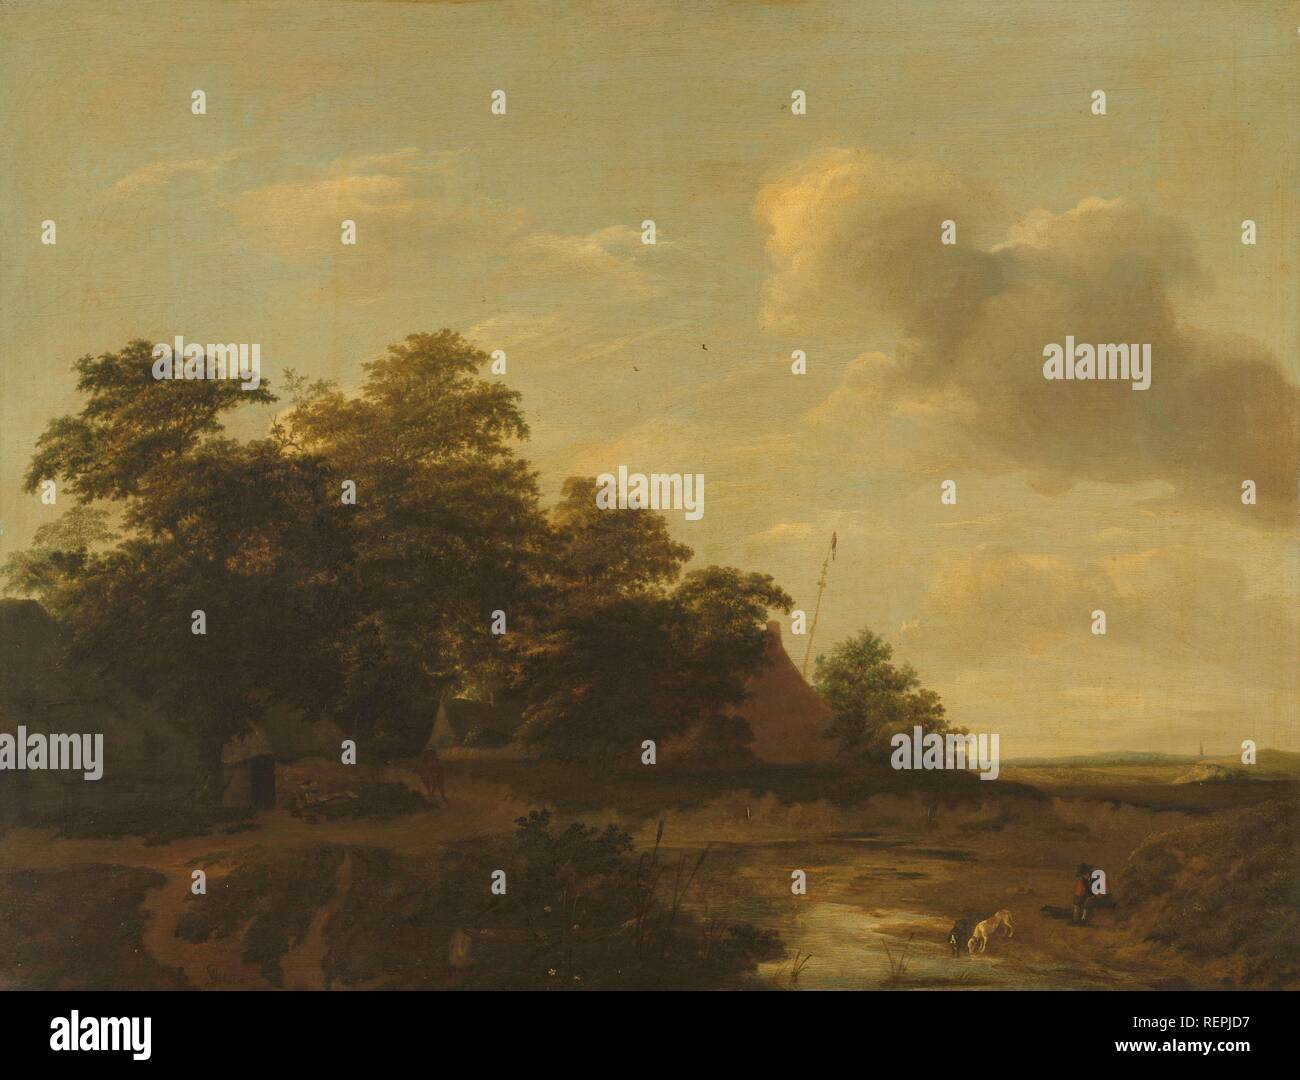 Paesaggio con una fattoria. Dating: 1648. Misurazioni: h 53 cm × W 66 cm. Museo: Rijksmuseum Amsterdam. Autore: Jan Vermeer van Haarlem (I). Jan van der Meer (II) (respinto attribuzione). Foto Stock